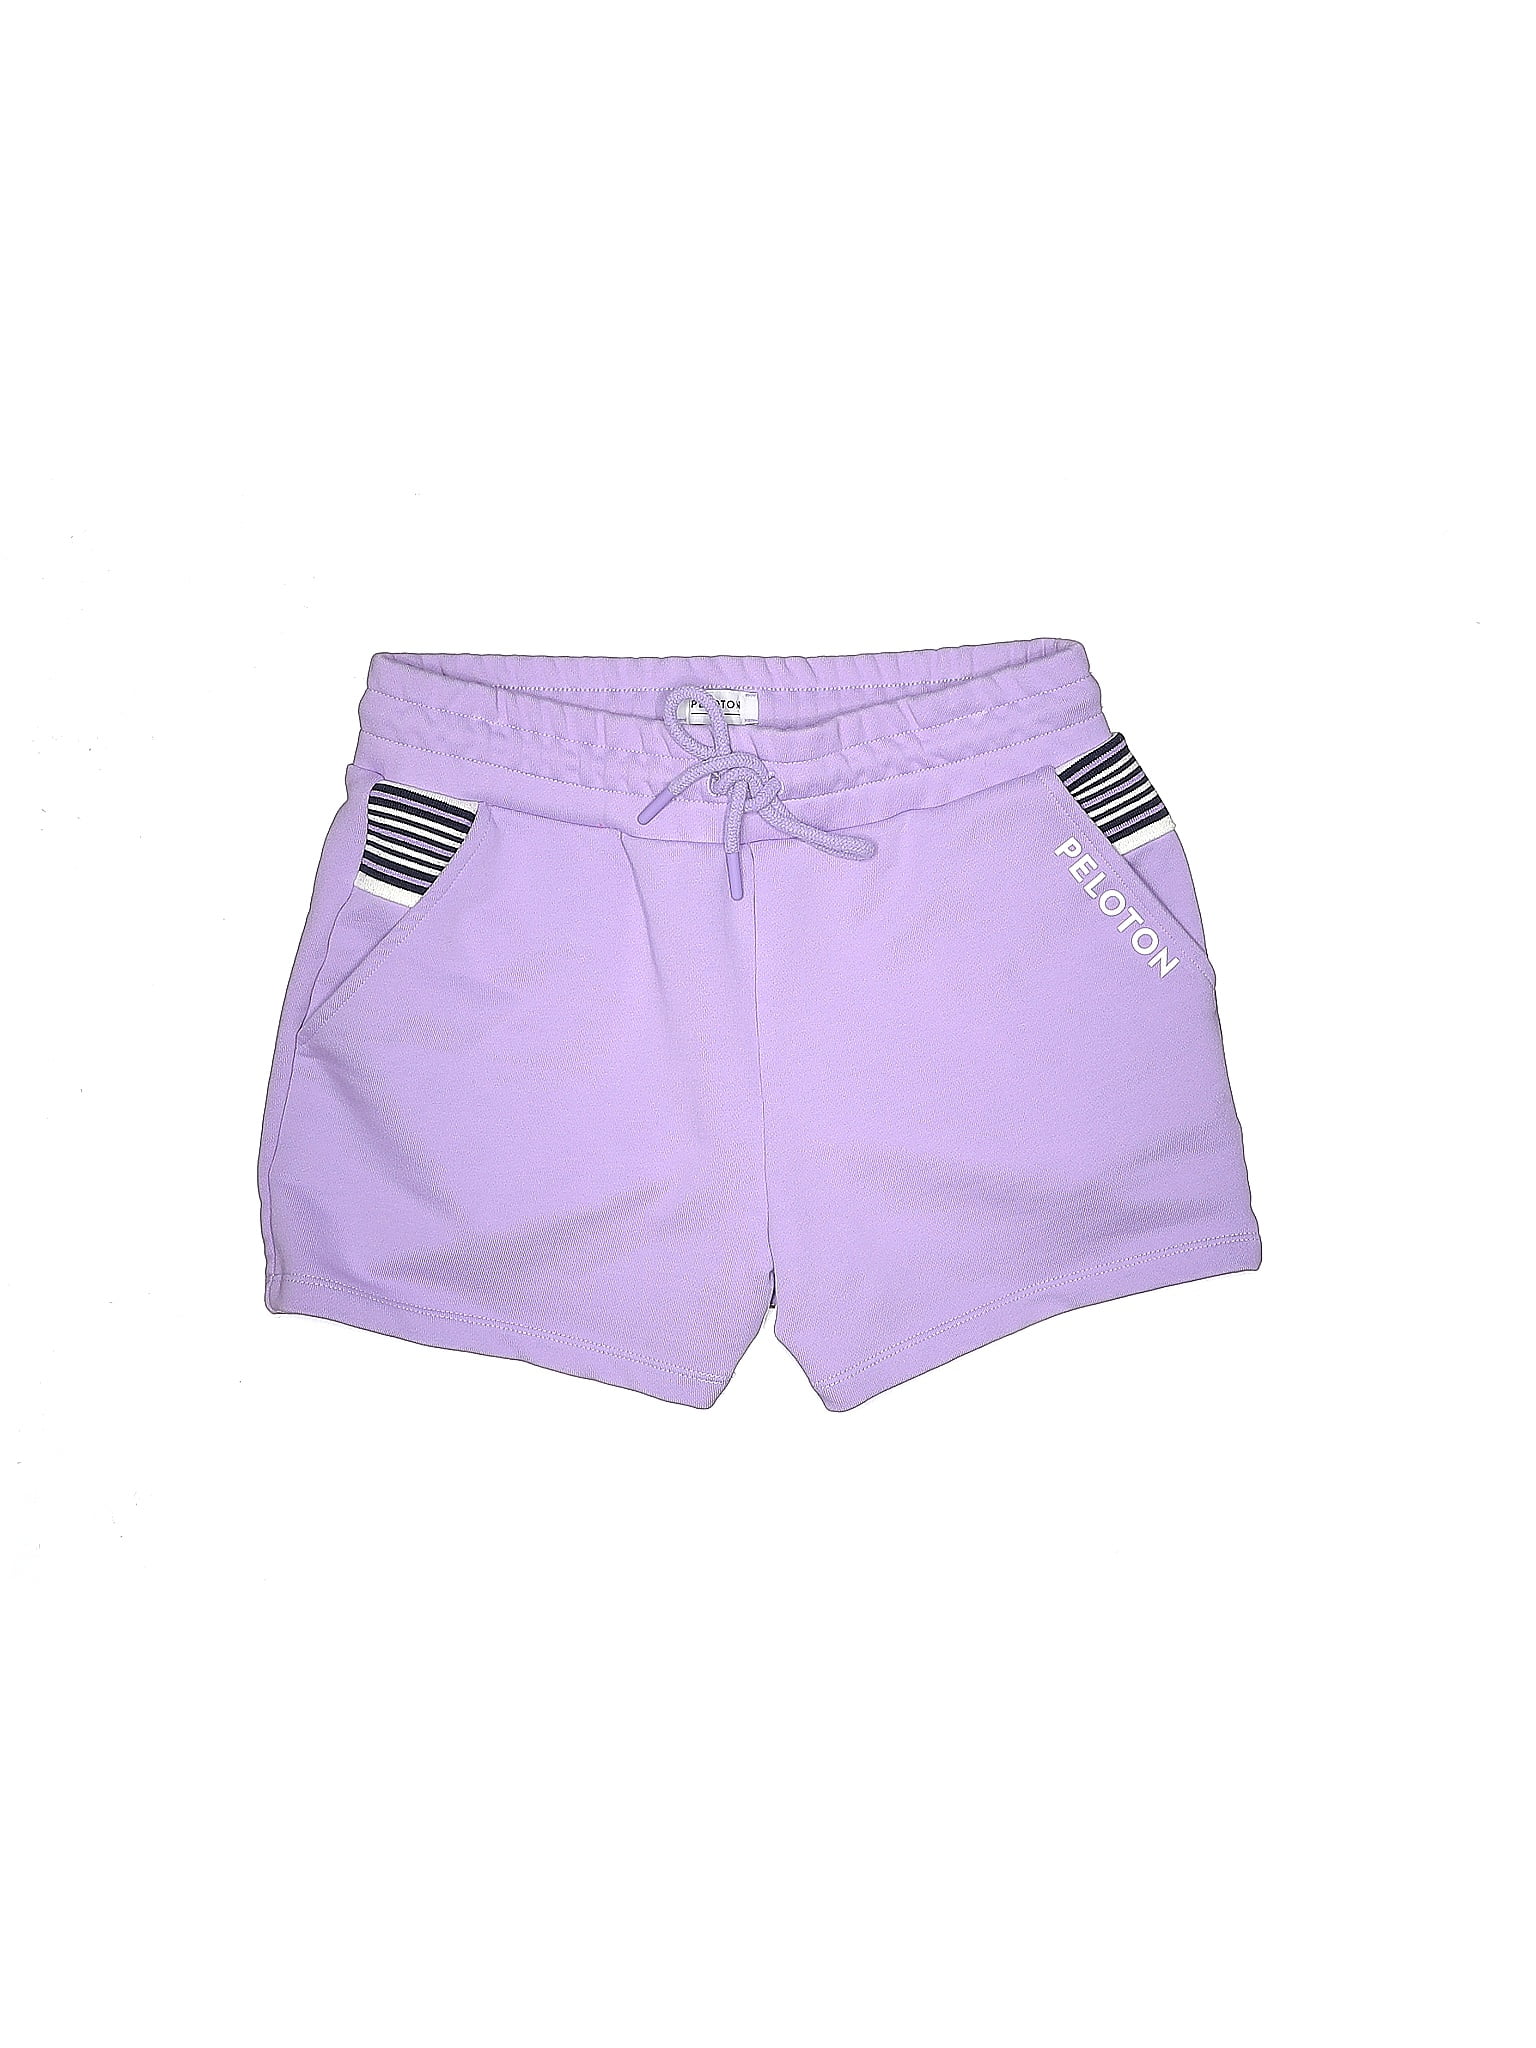 Peloton Solid Lavender Purple Shorts Size S - 47% off